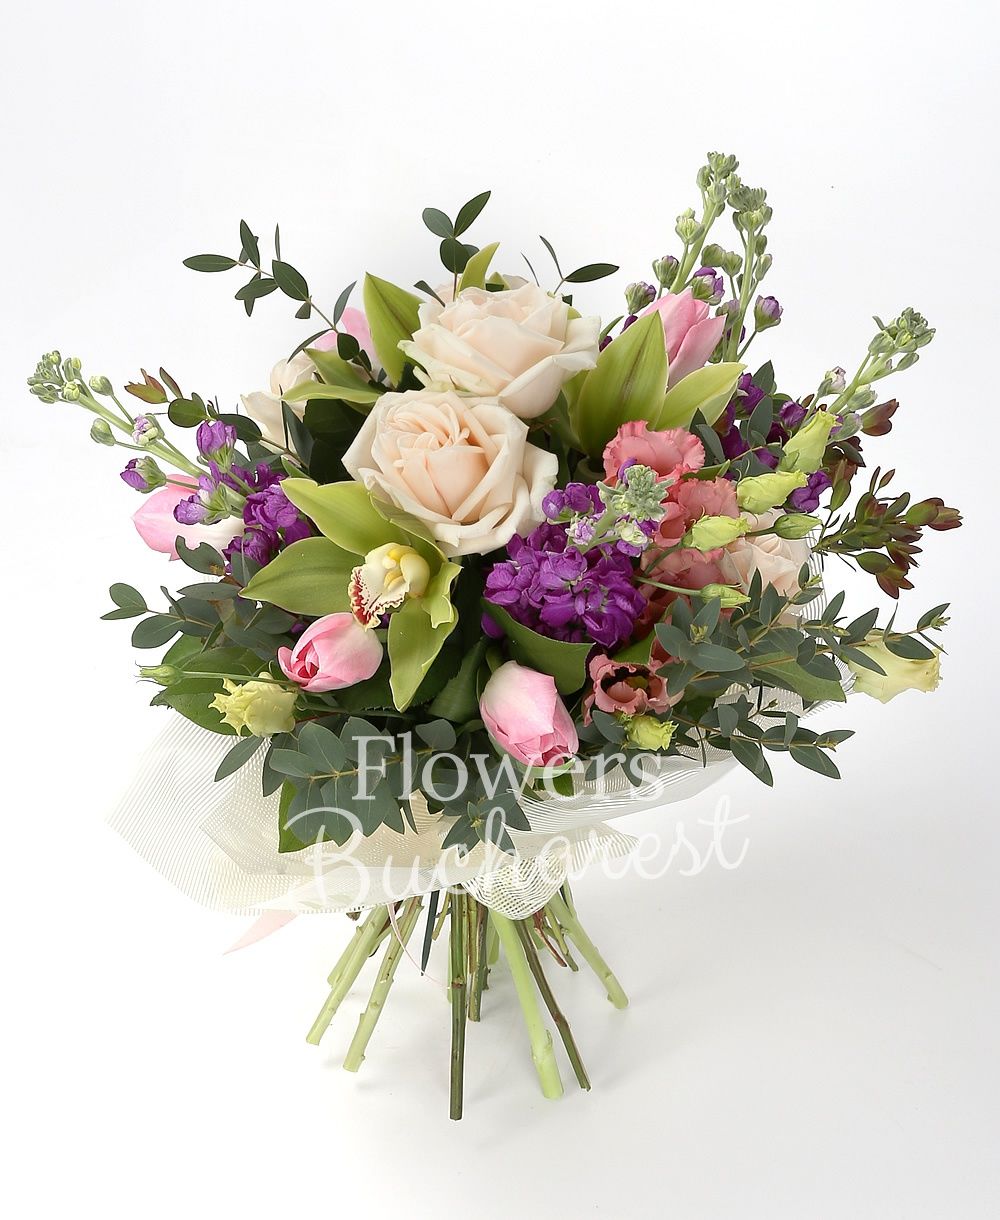 5 cream roses, 5 mauve matthiola, 5 pink tulips, 2 pink lisianthus, green cymbidium, greenery